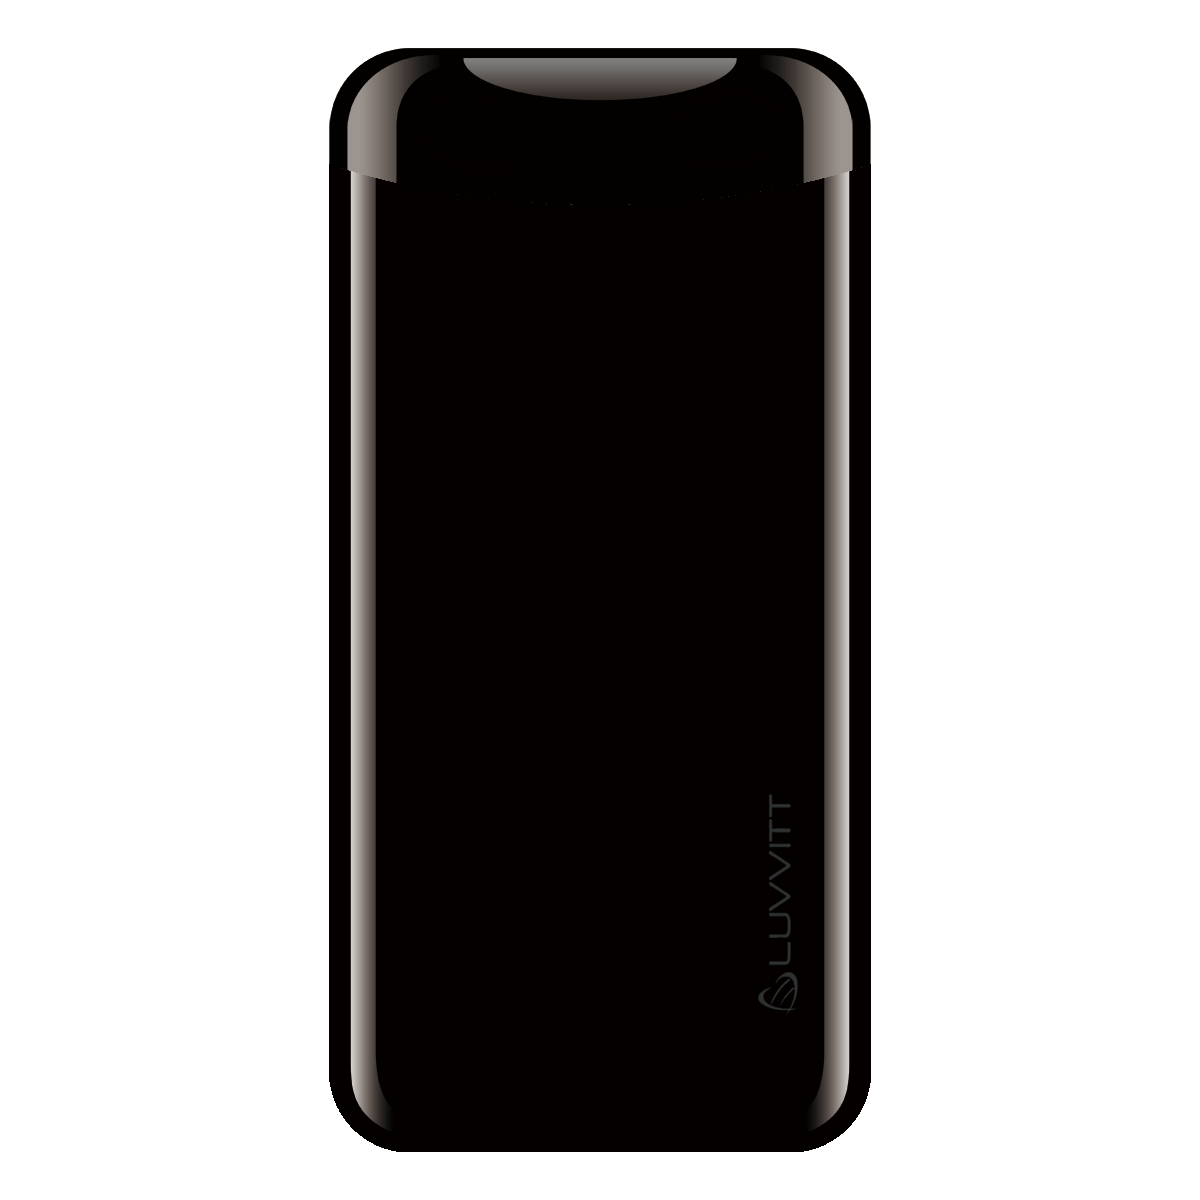 LUVVITT EMOJI Power Bank 6000 mAh Ultra Slim Portable Charger - Black